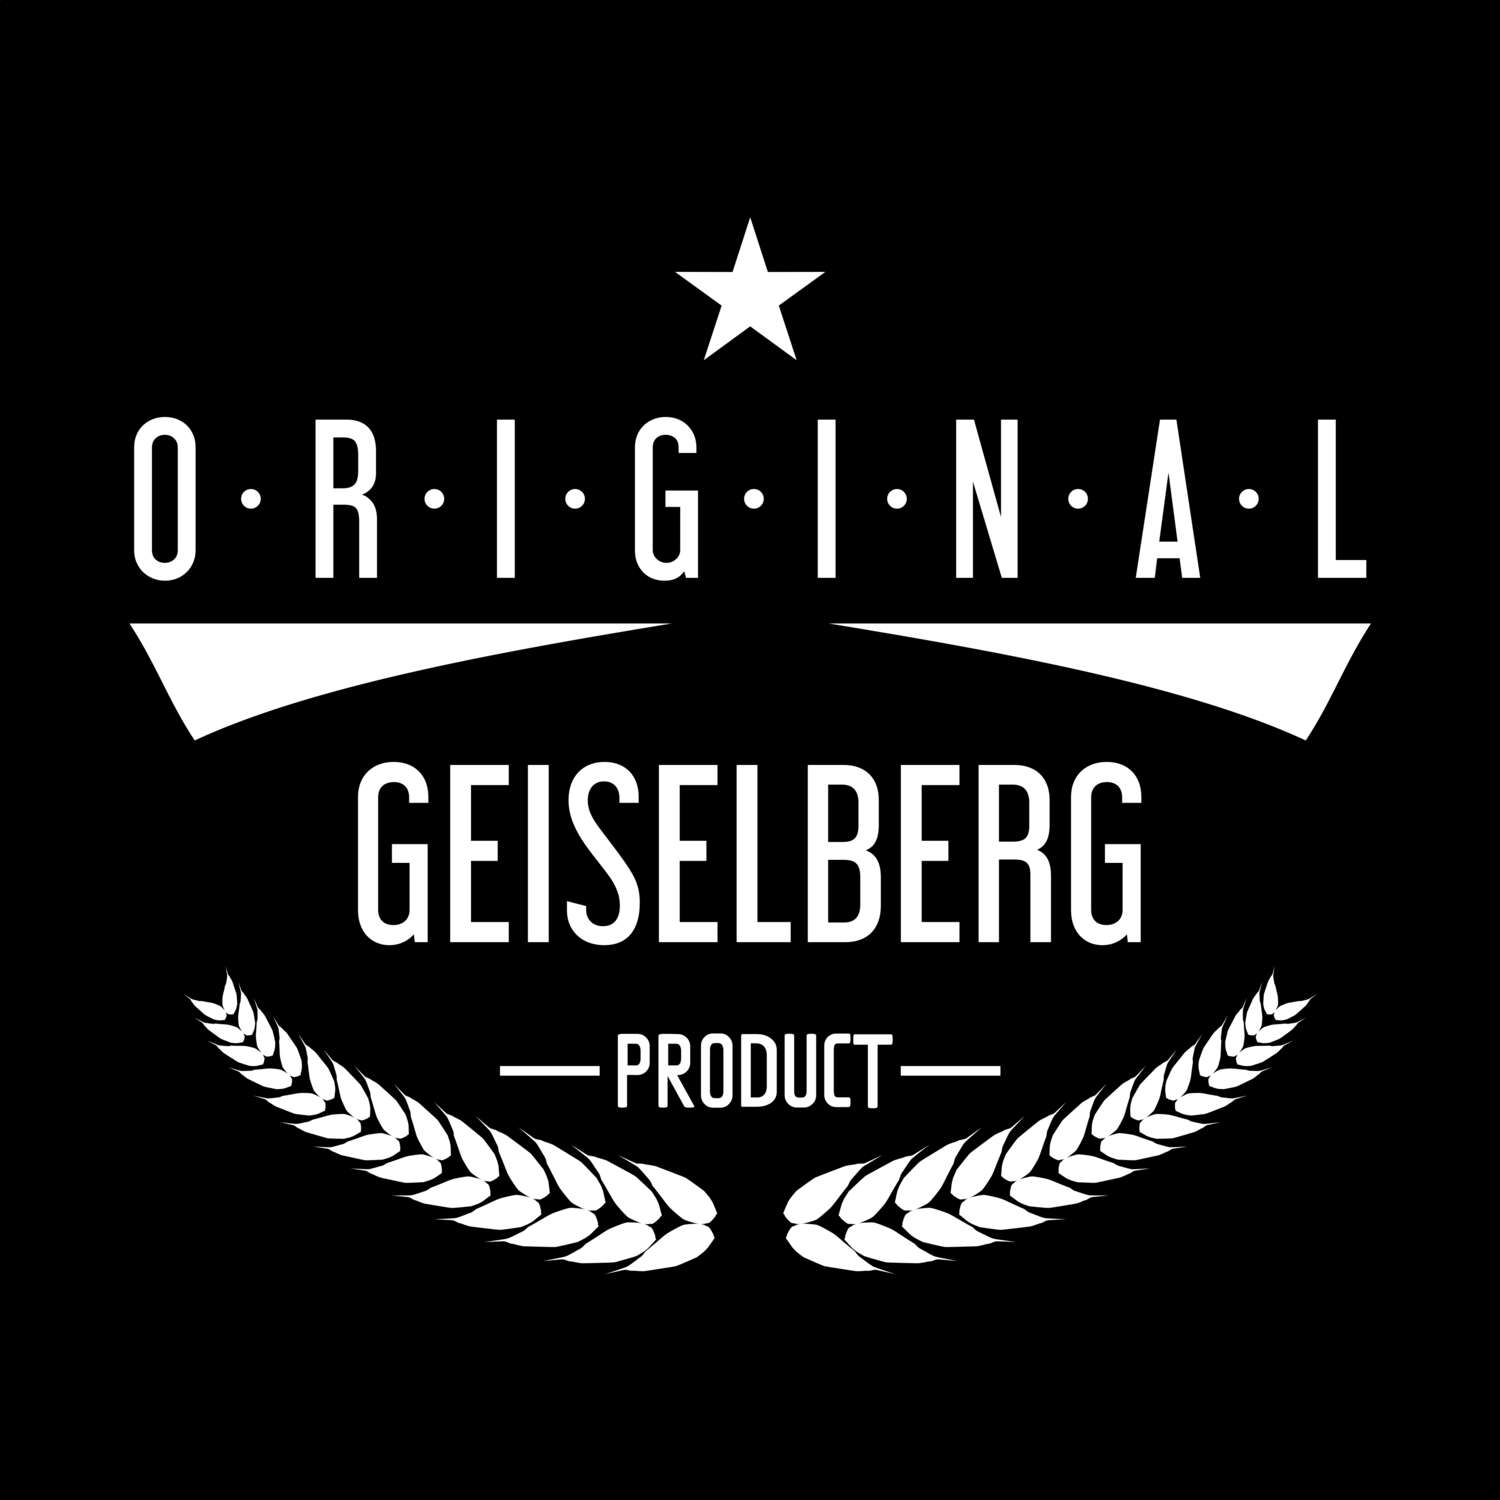 Geiselberg T-Shirt »Original Product«